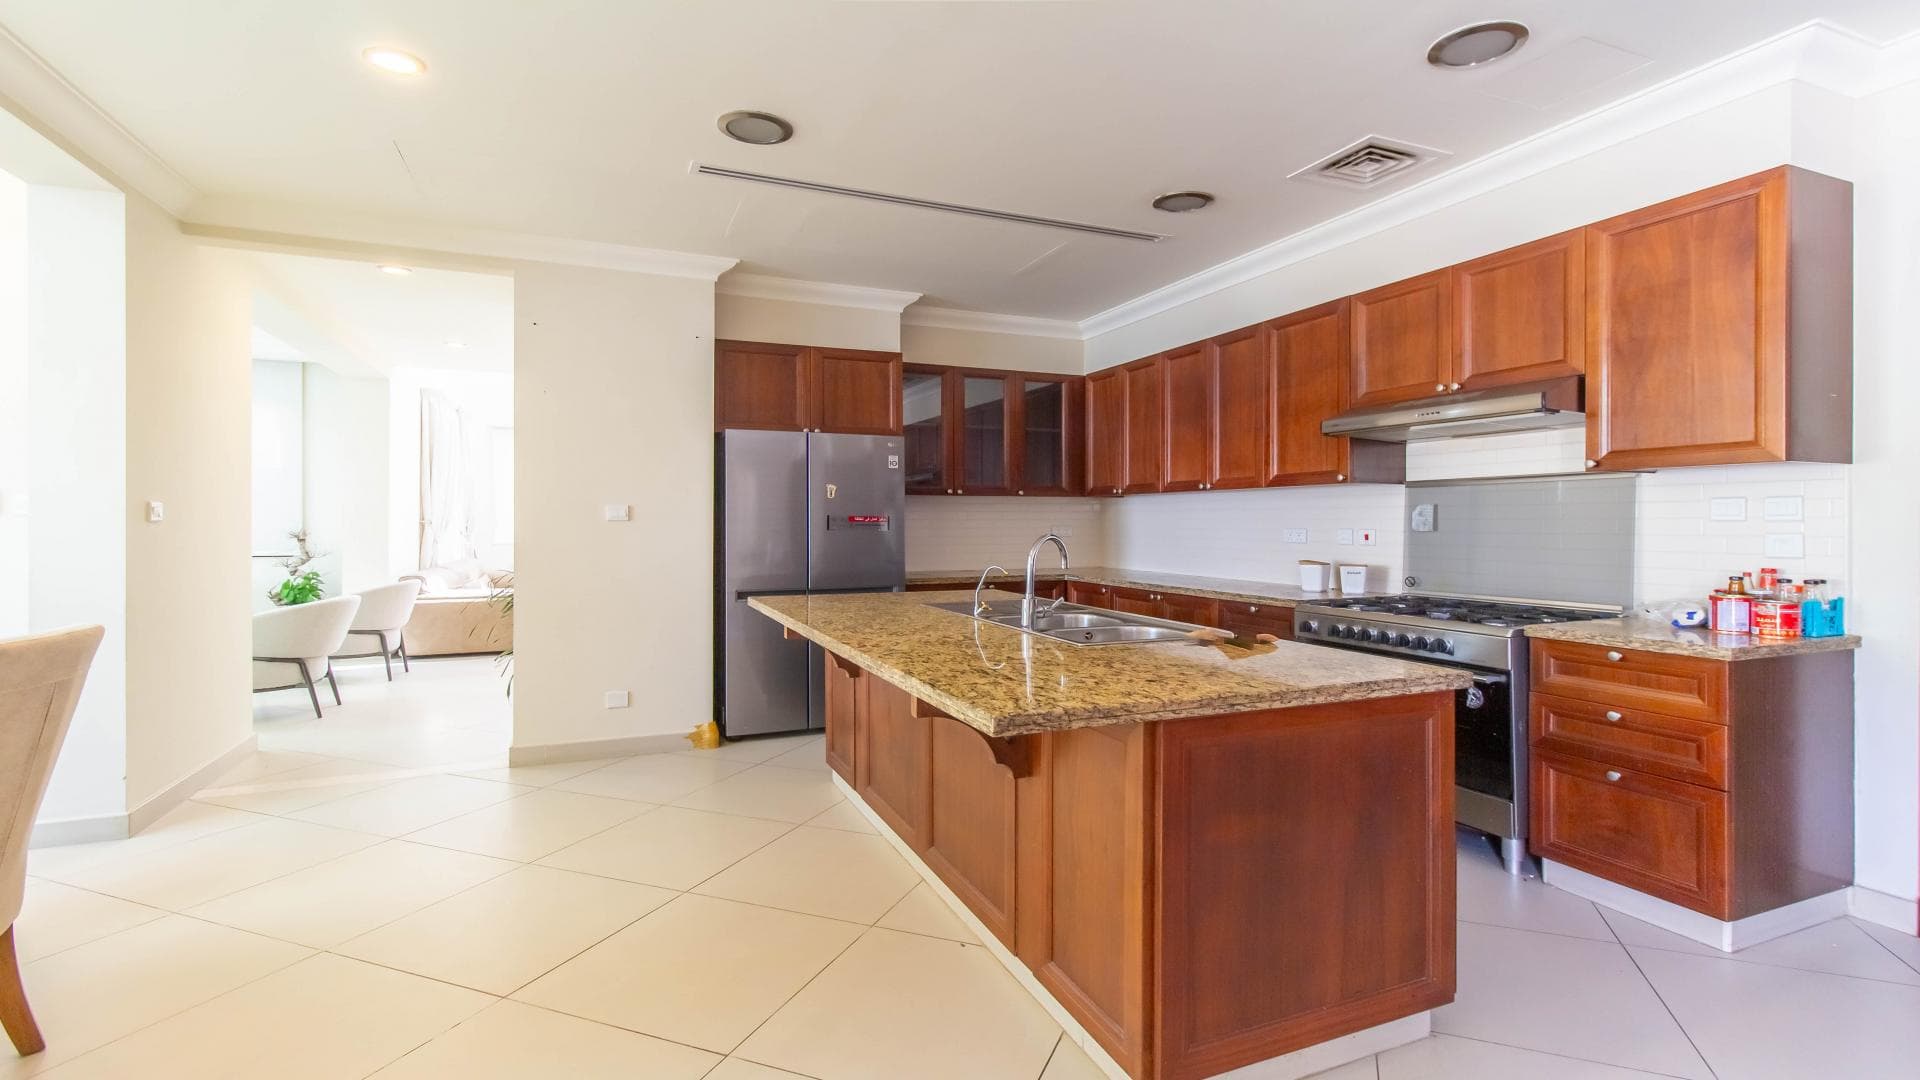 5 Bedroom Villa For Rent Al Bateen Residence Lp27831 31b8f8a4d23a0600.jpg